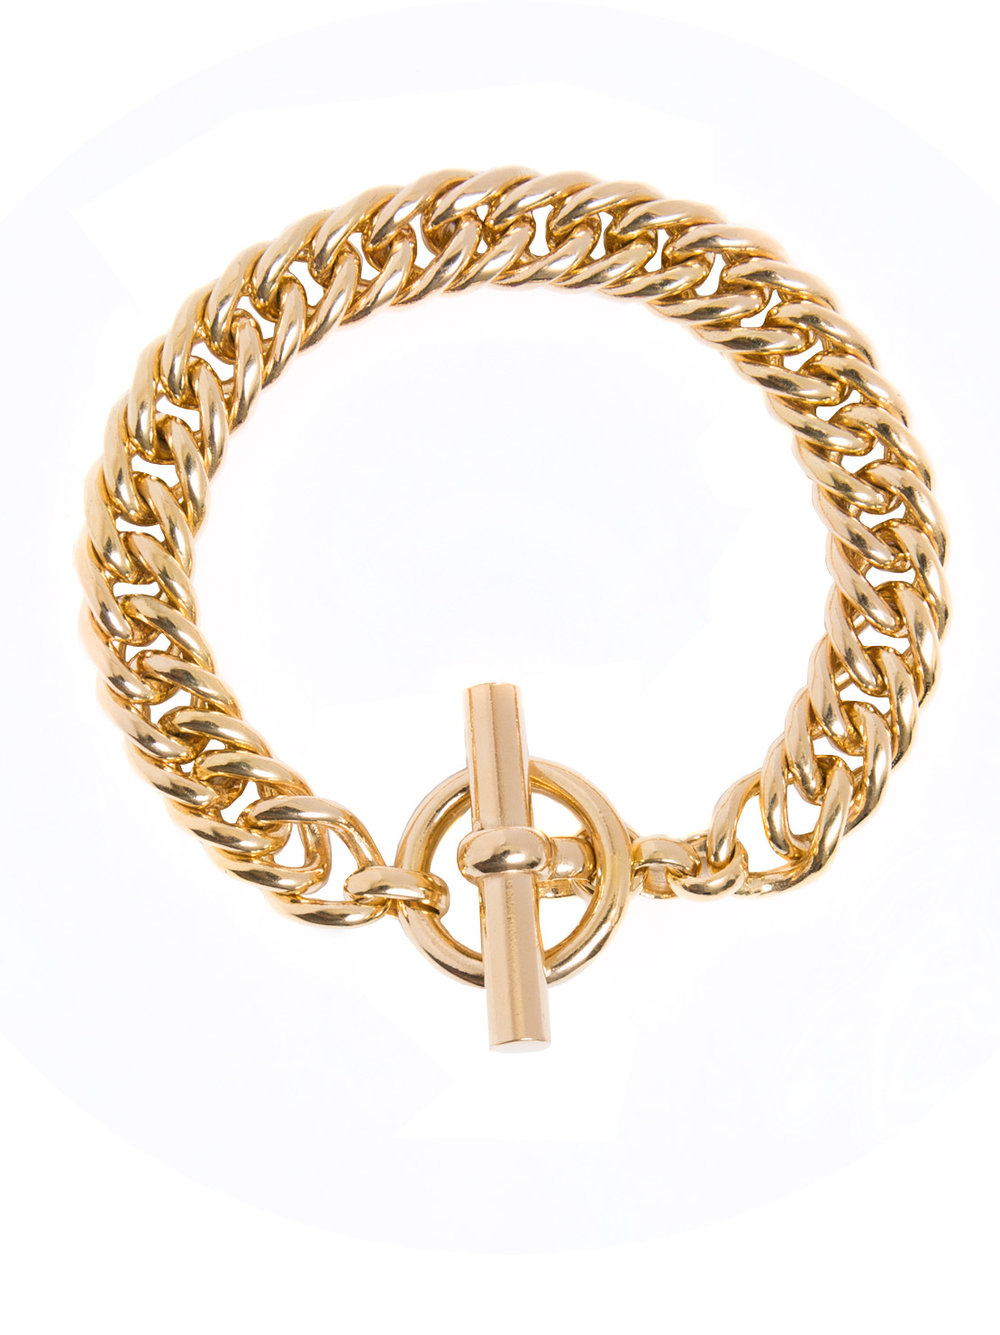 tsj0573-large-gold-curb-chain-bracelet-copy.jpg